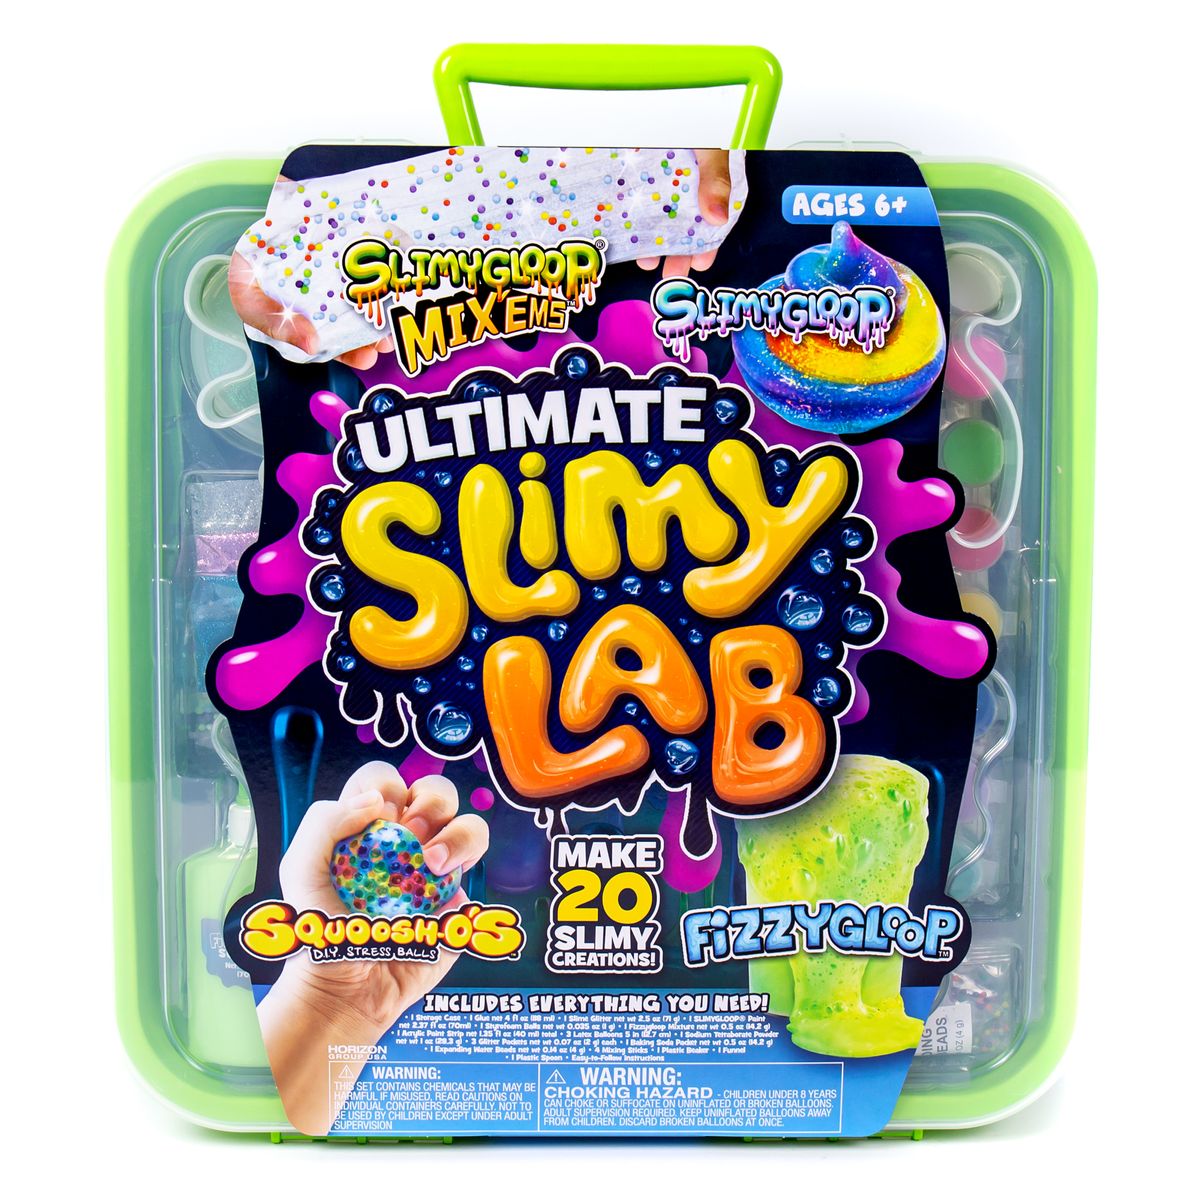 [RDY] [送料無料] SLIMYGLOOP 究極のスライミー・ラボラトリー 4イン1のスライミー・アクティビティ [楽天海外通販] | SLIMYGLOOP Ultimate Slimy Laboratory, 4-in-1 Slimy Activities